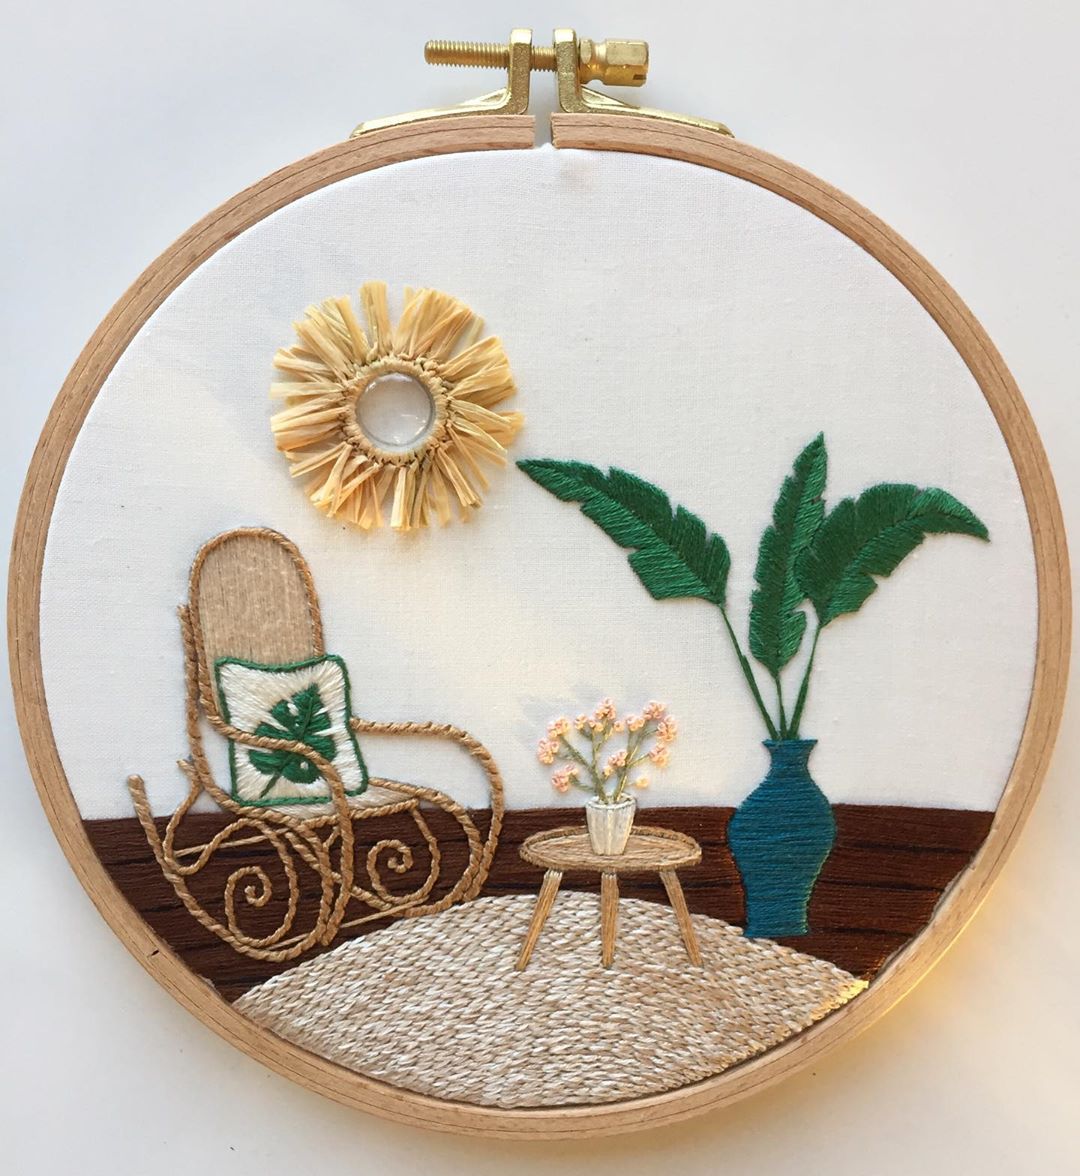 Interior embroidery by Fatma Karaca